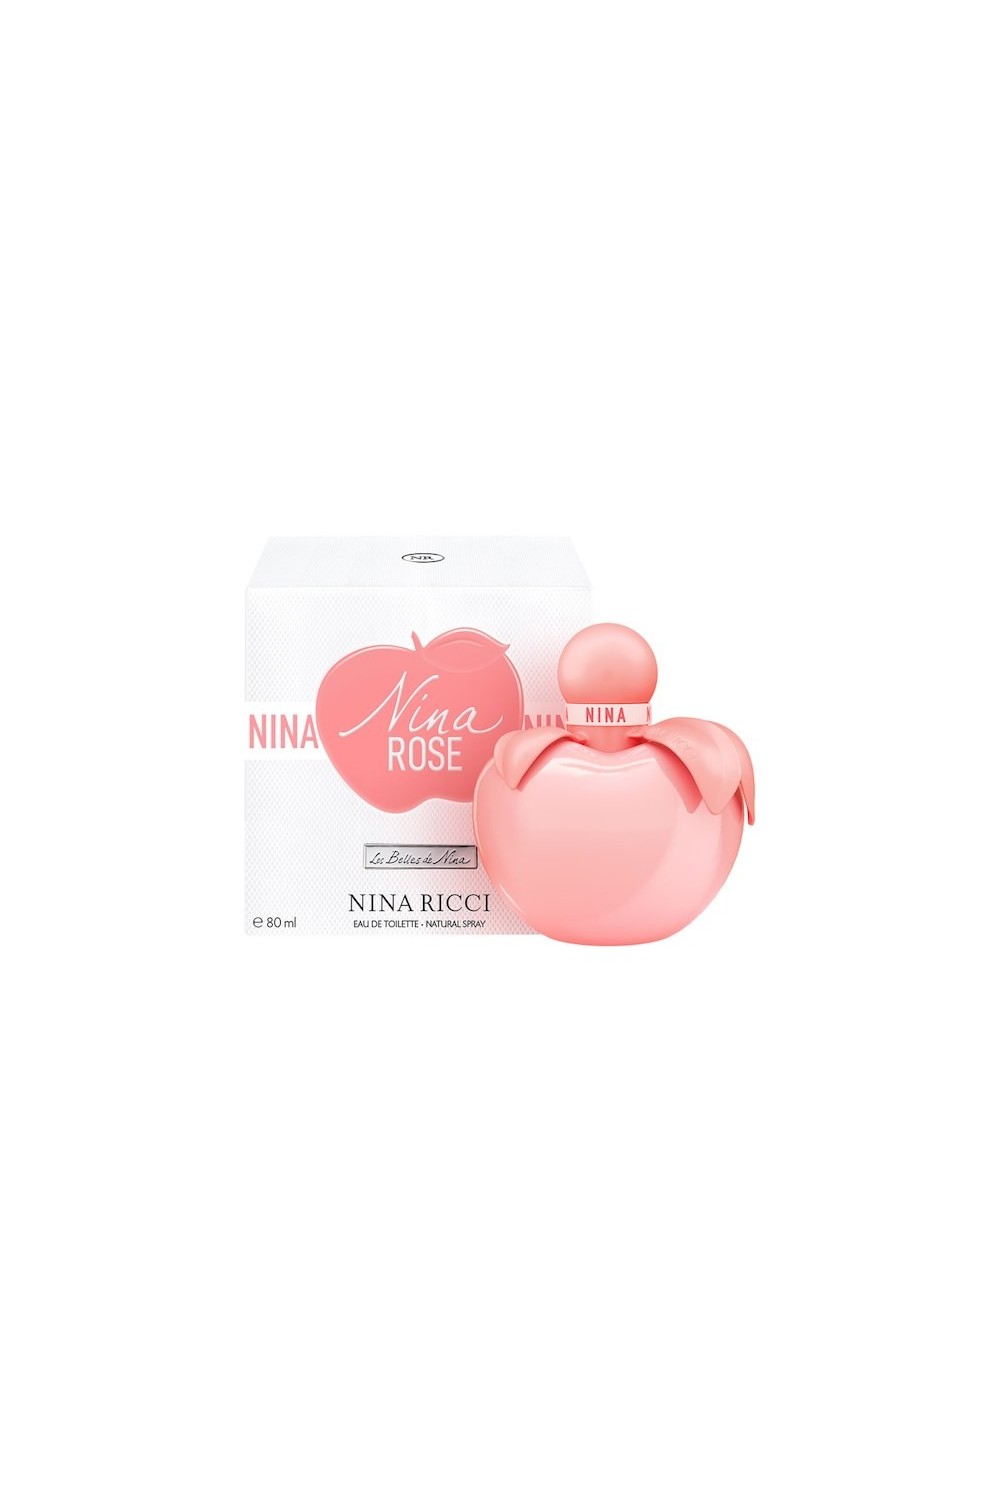 NINA RICCI - Nina Rose Eau De Toilette Spray 80ml